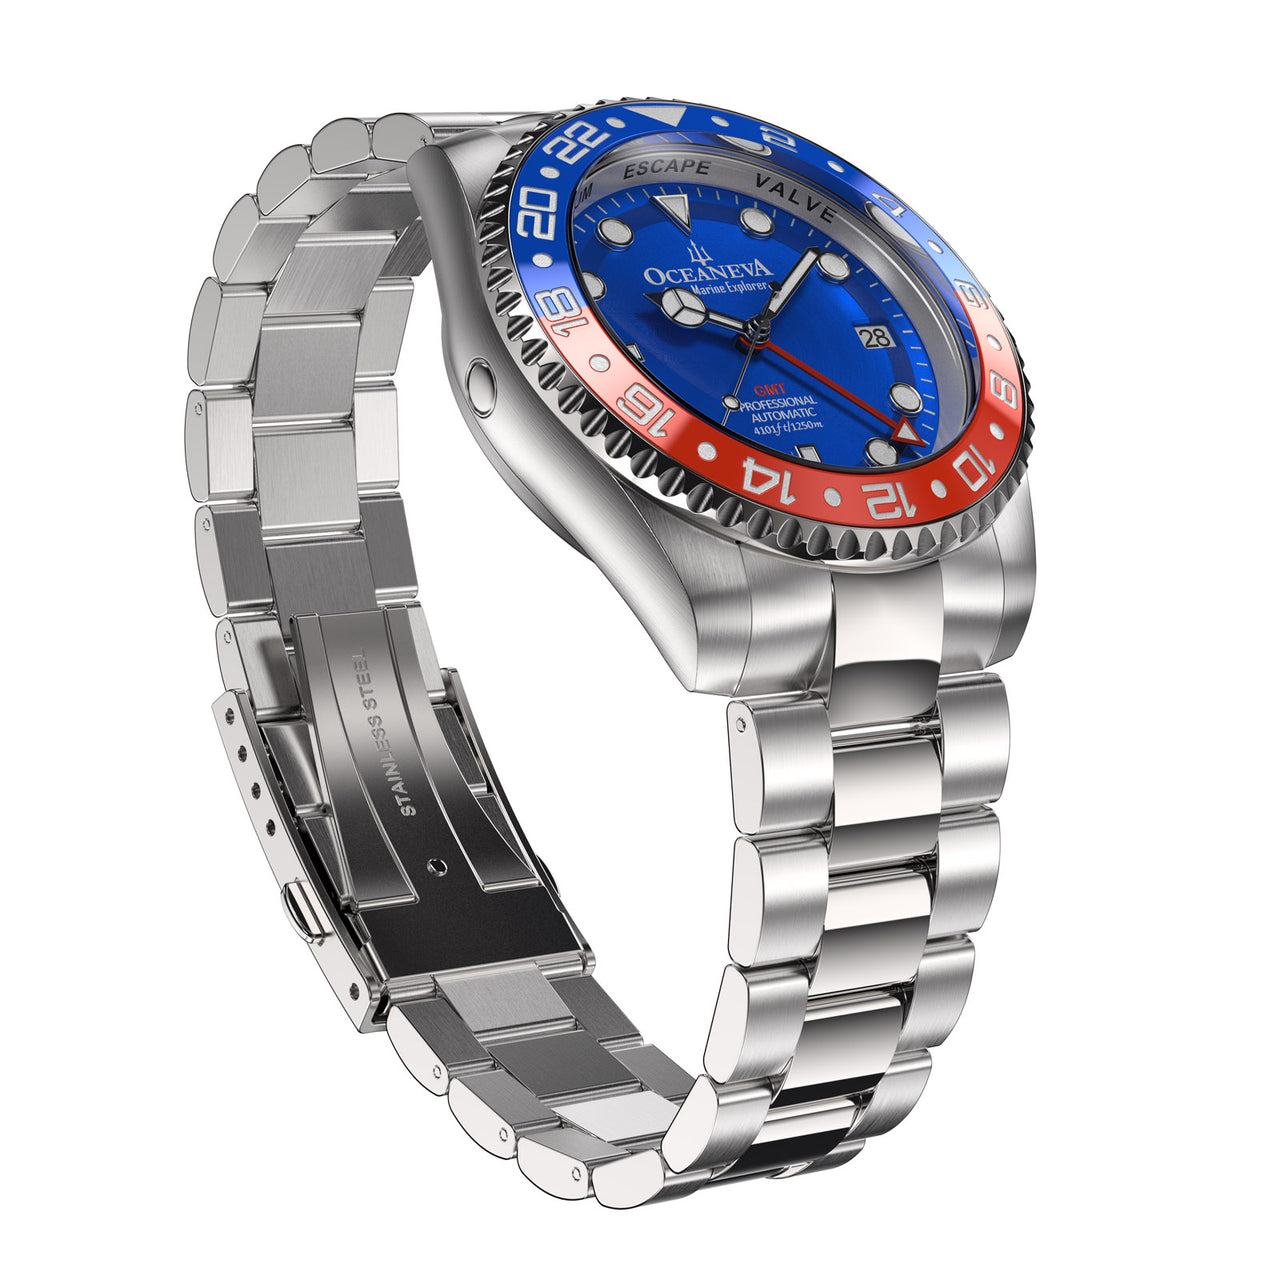 Oceaneva™ Men's GMT Automatic Deep Marine Explorer 1250M Pro Diver Red Blue Bezel Blue Dial Watch